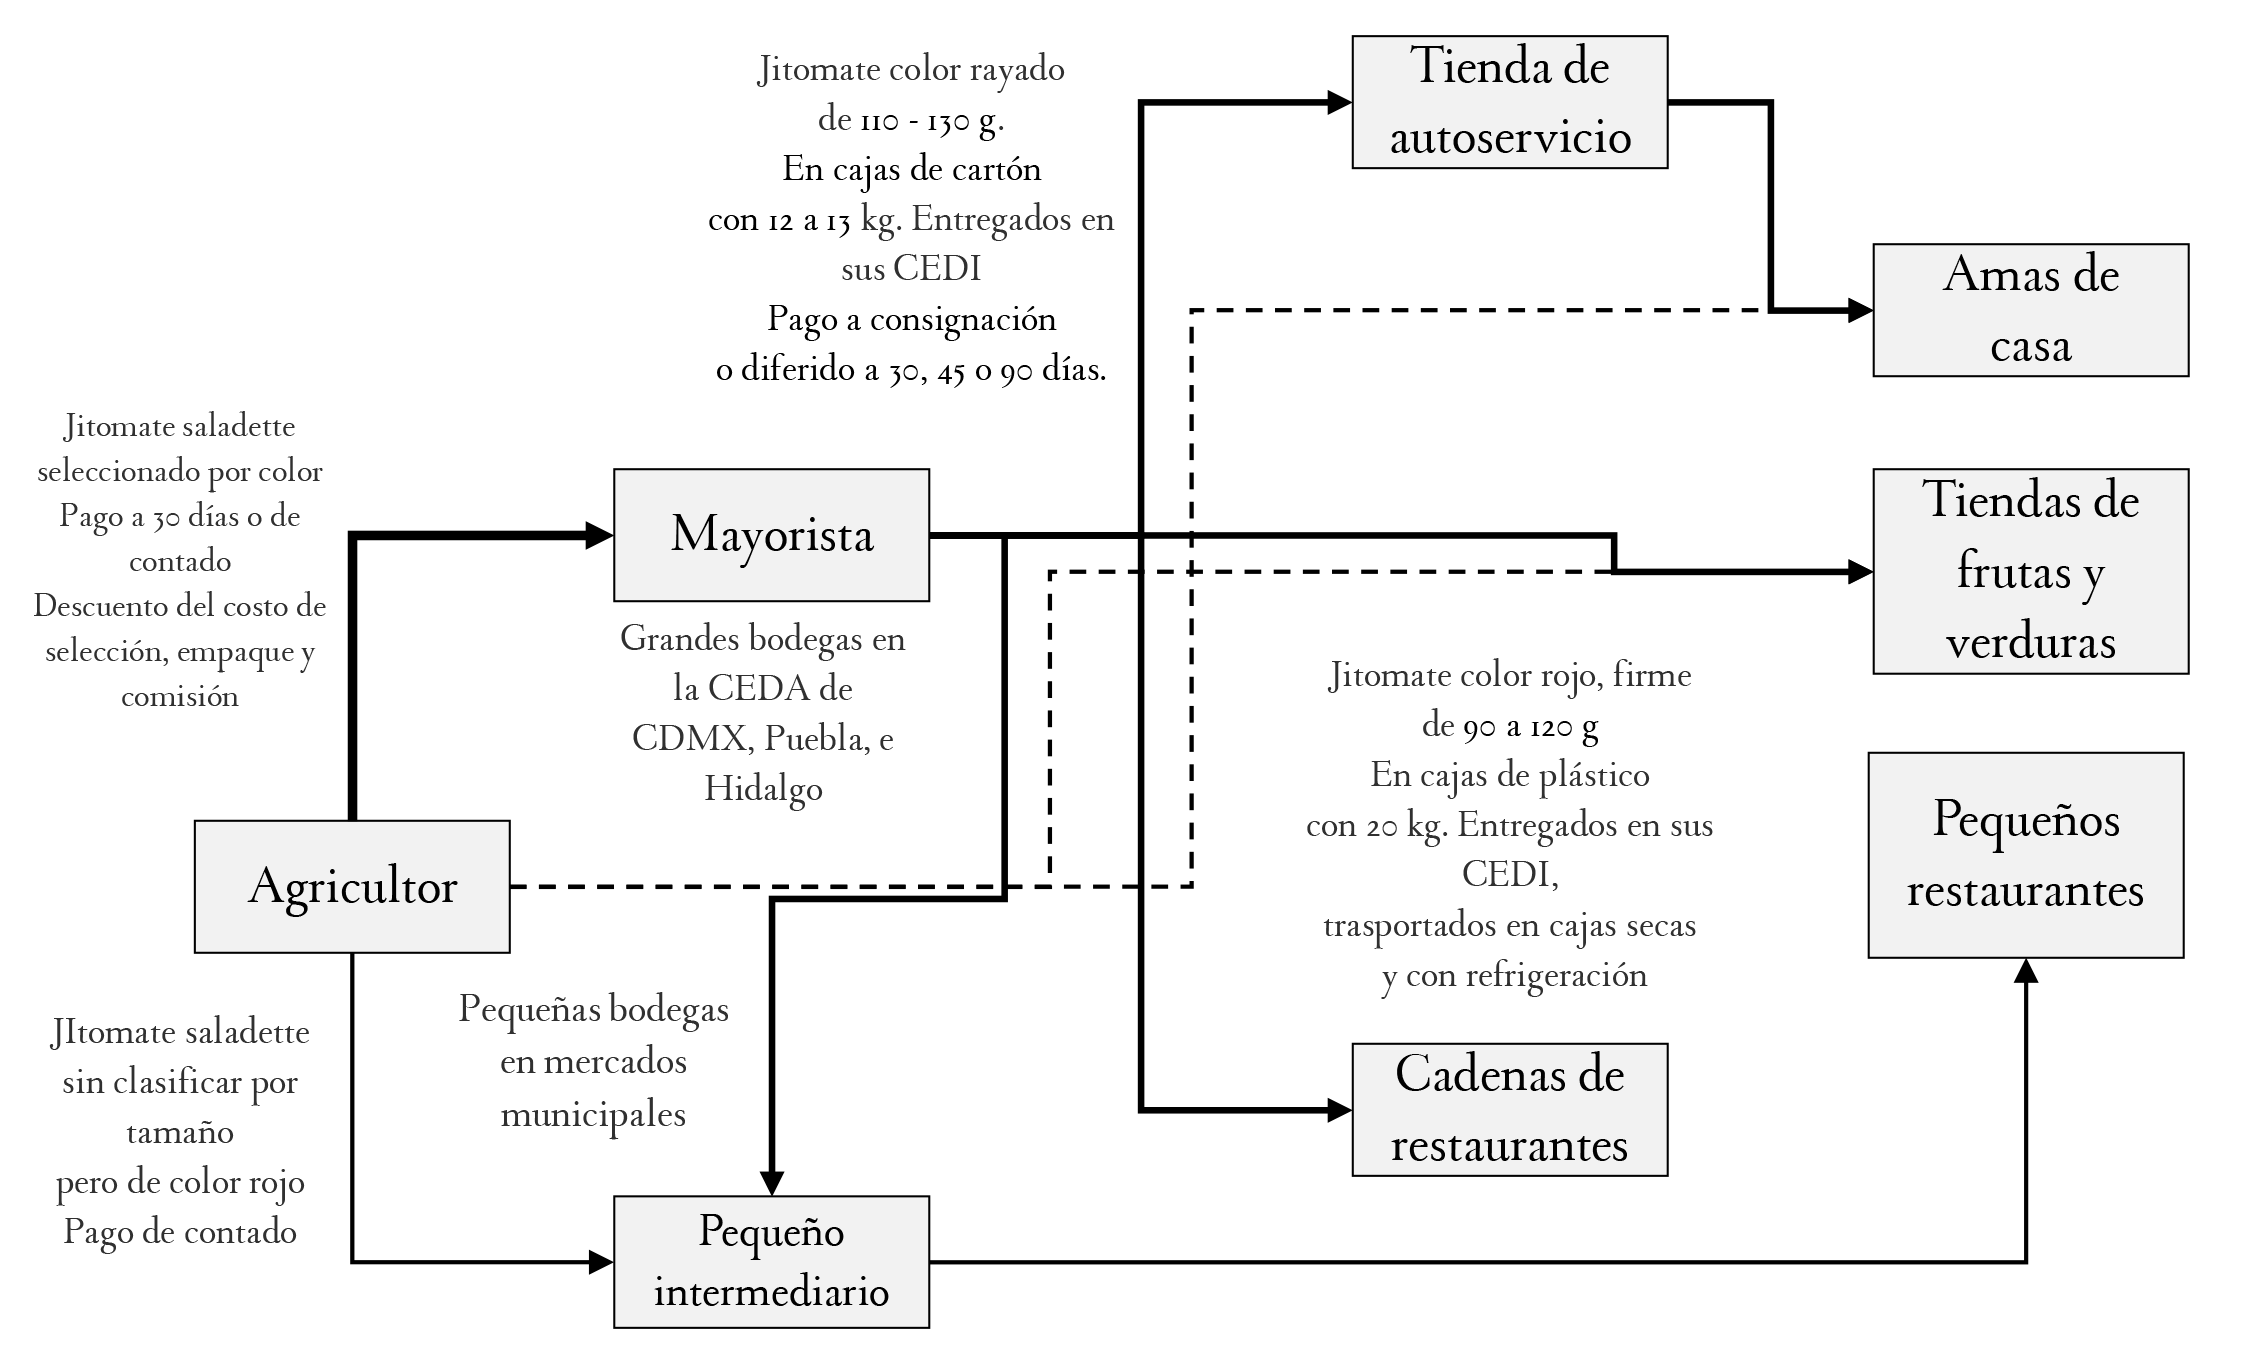 Canales de comercialización de jitomate en agricultura protegida en Puebla, Tlaxcala e Hidalgo,
México